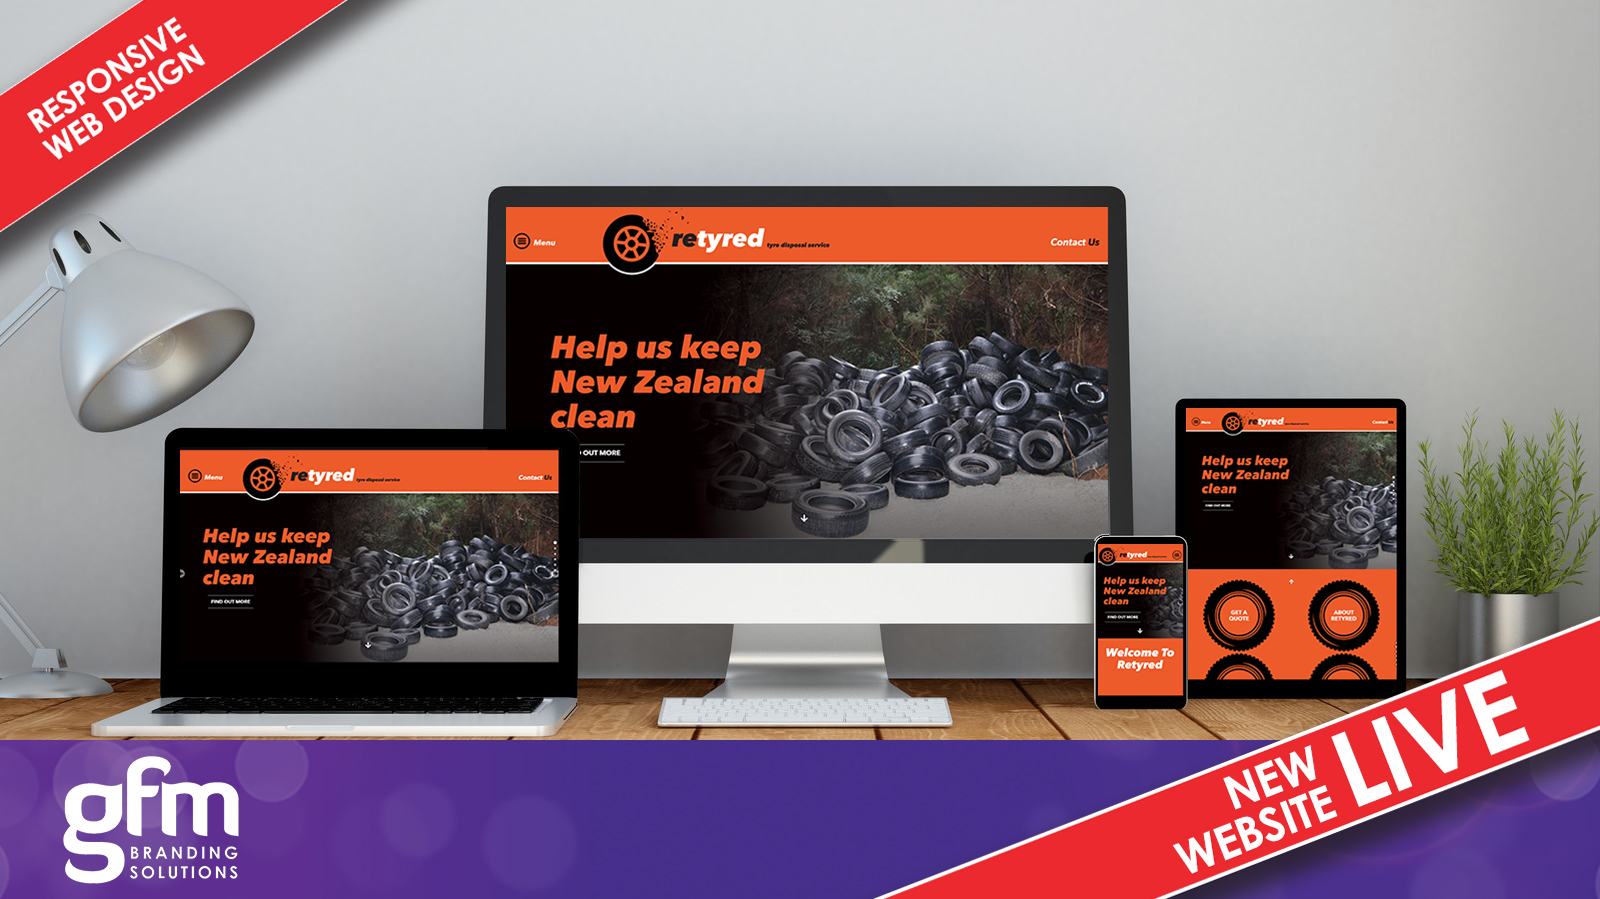 Retyred NZ fully responsive website design on multiple screens